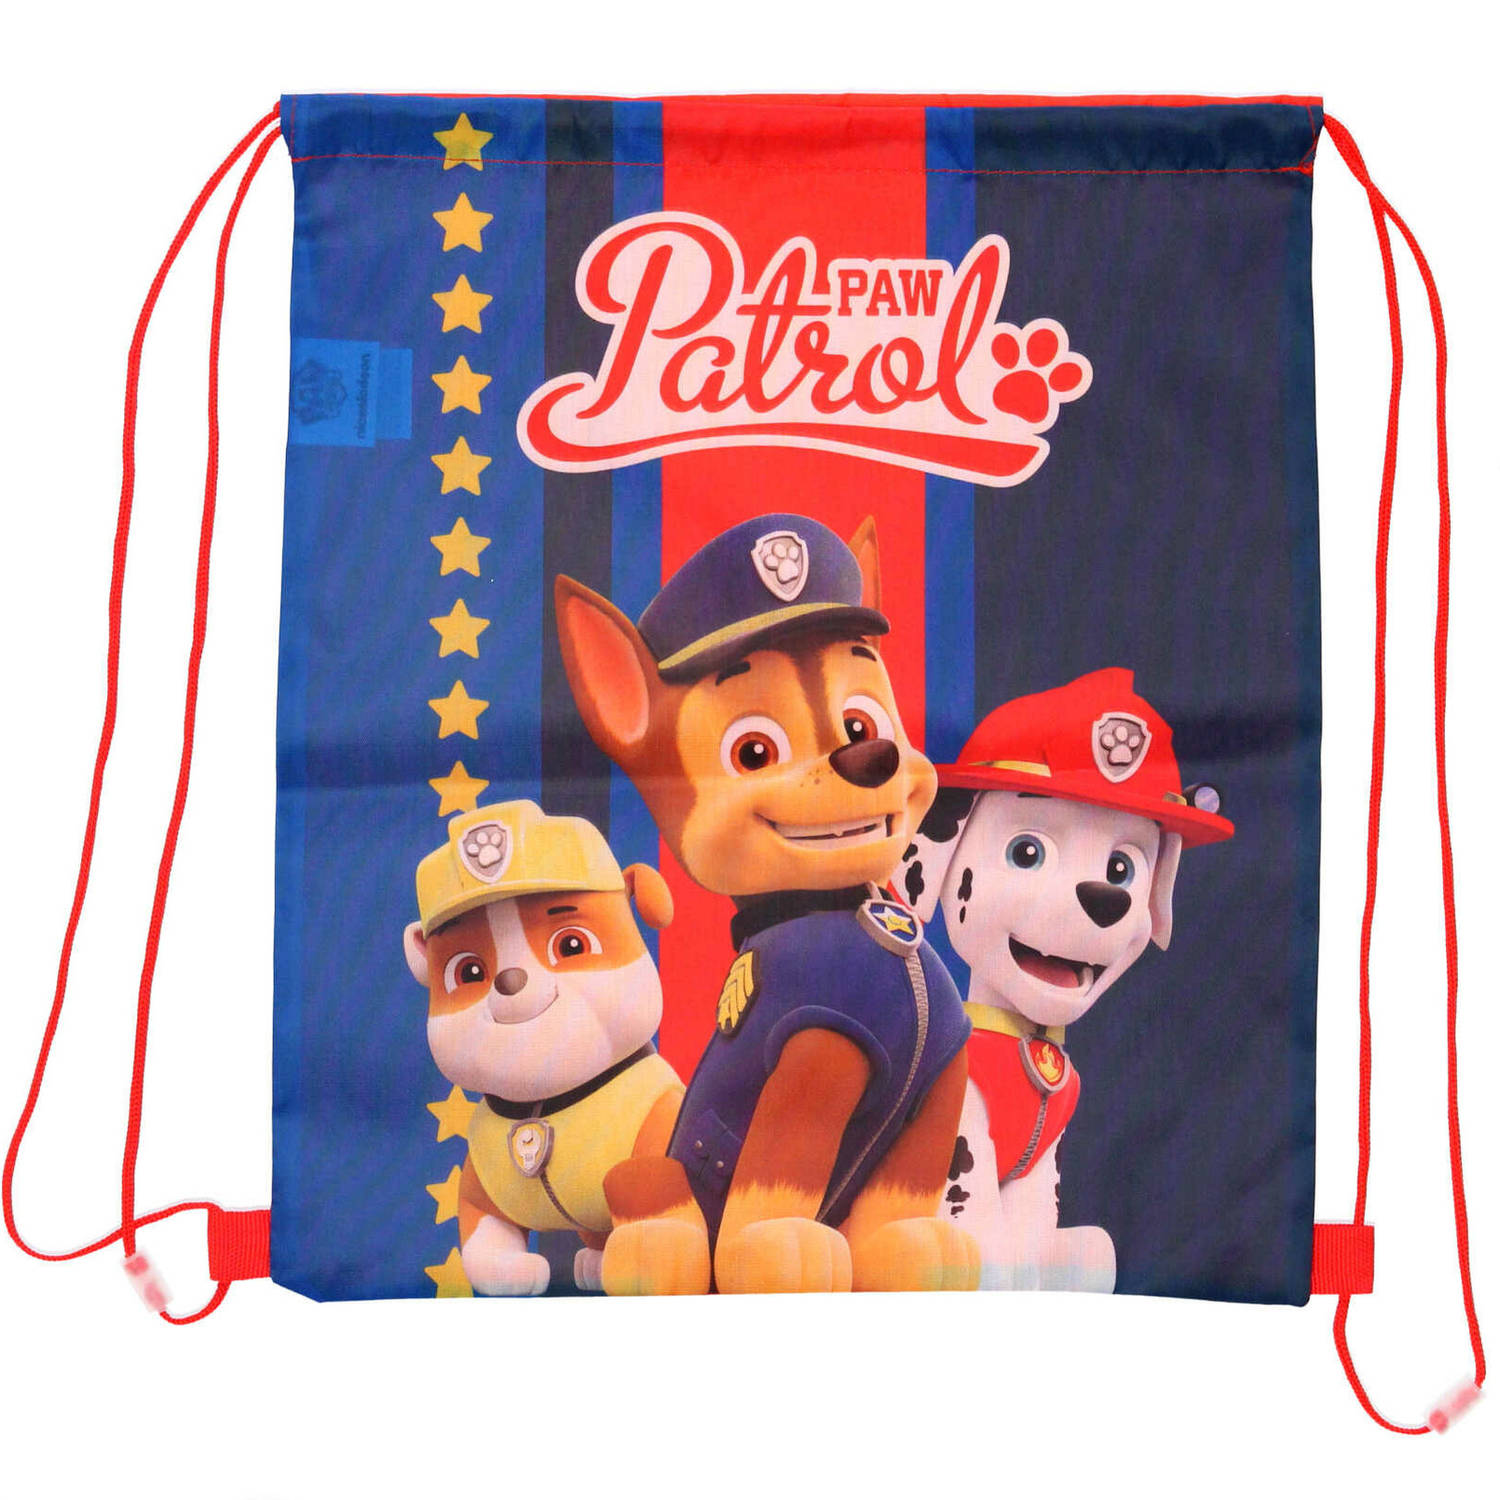 Paw Patrol Chase gymtas-rugzak-rugtas voor kinderen blauw-rood polyester 40 x 35 cm Gymtasje zwemtas